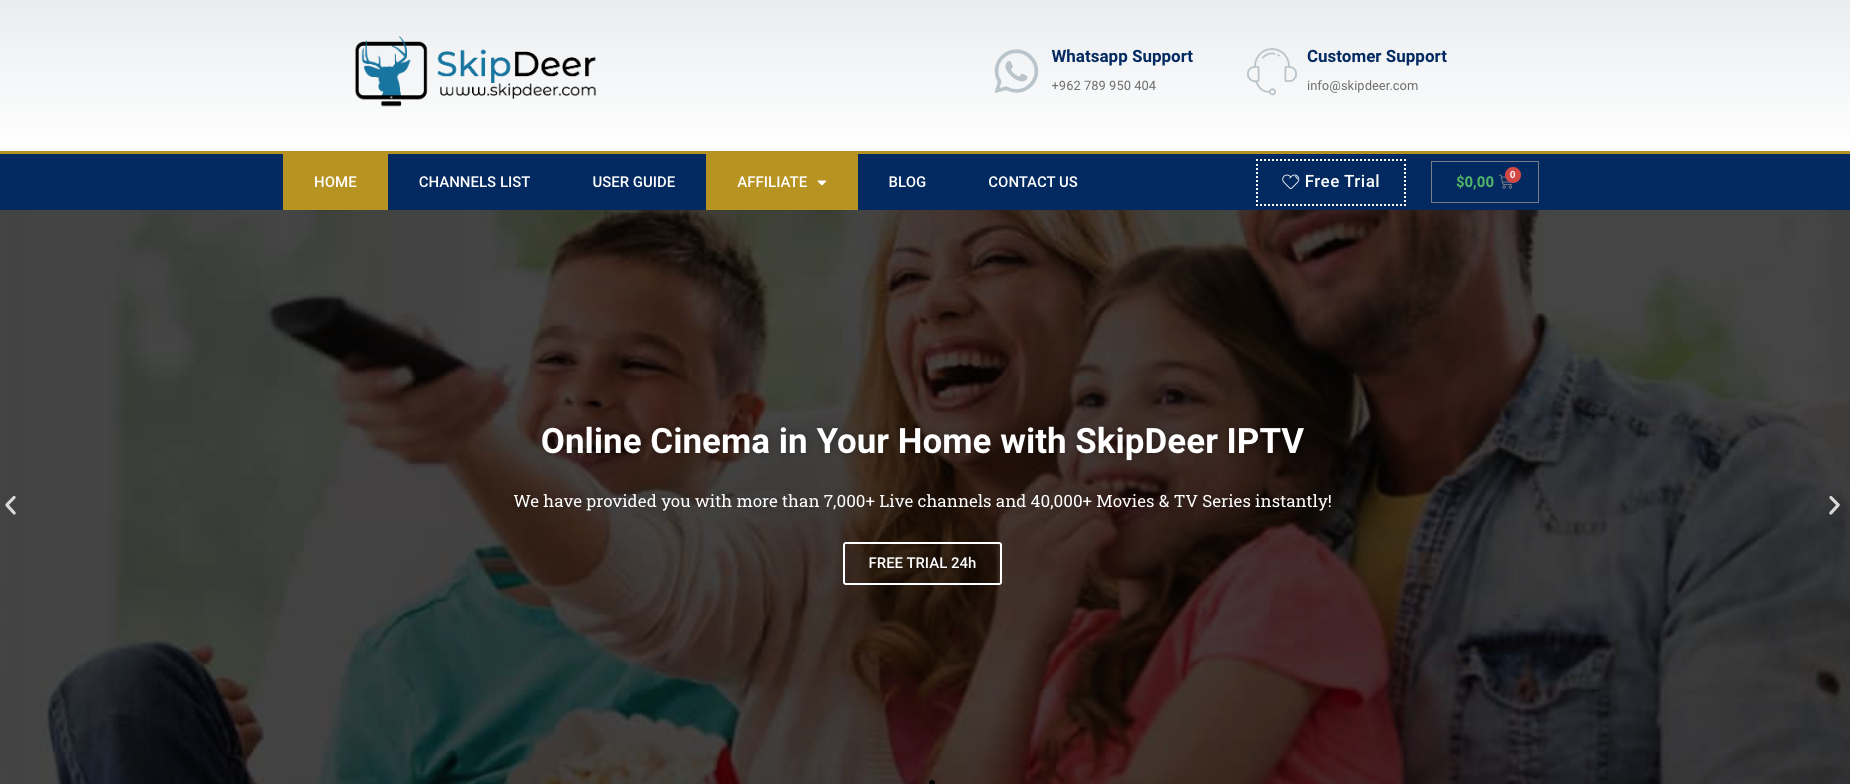 How to install SkipDeer IPTV